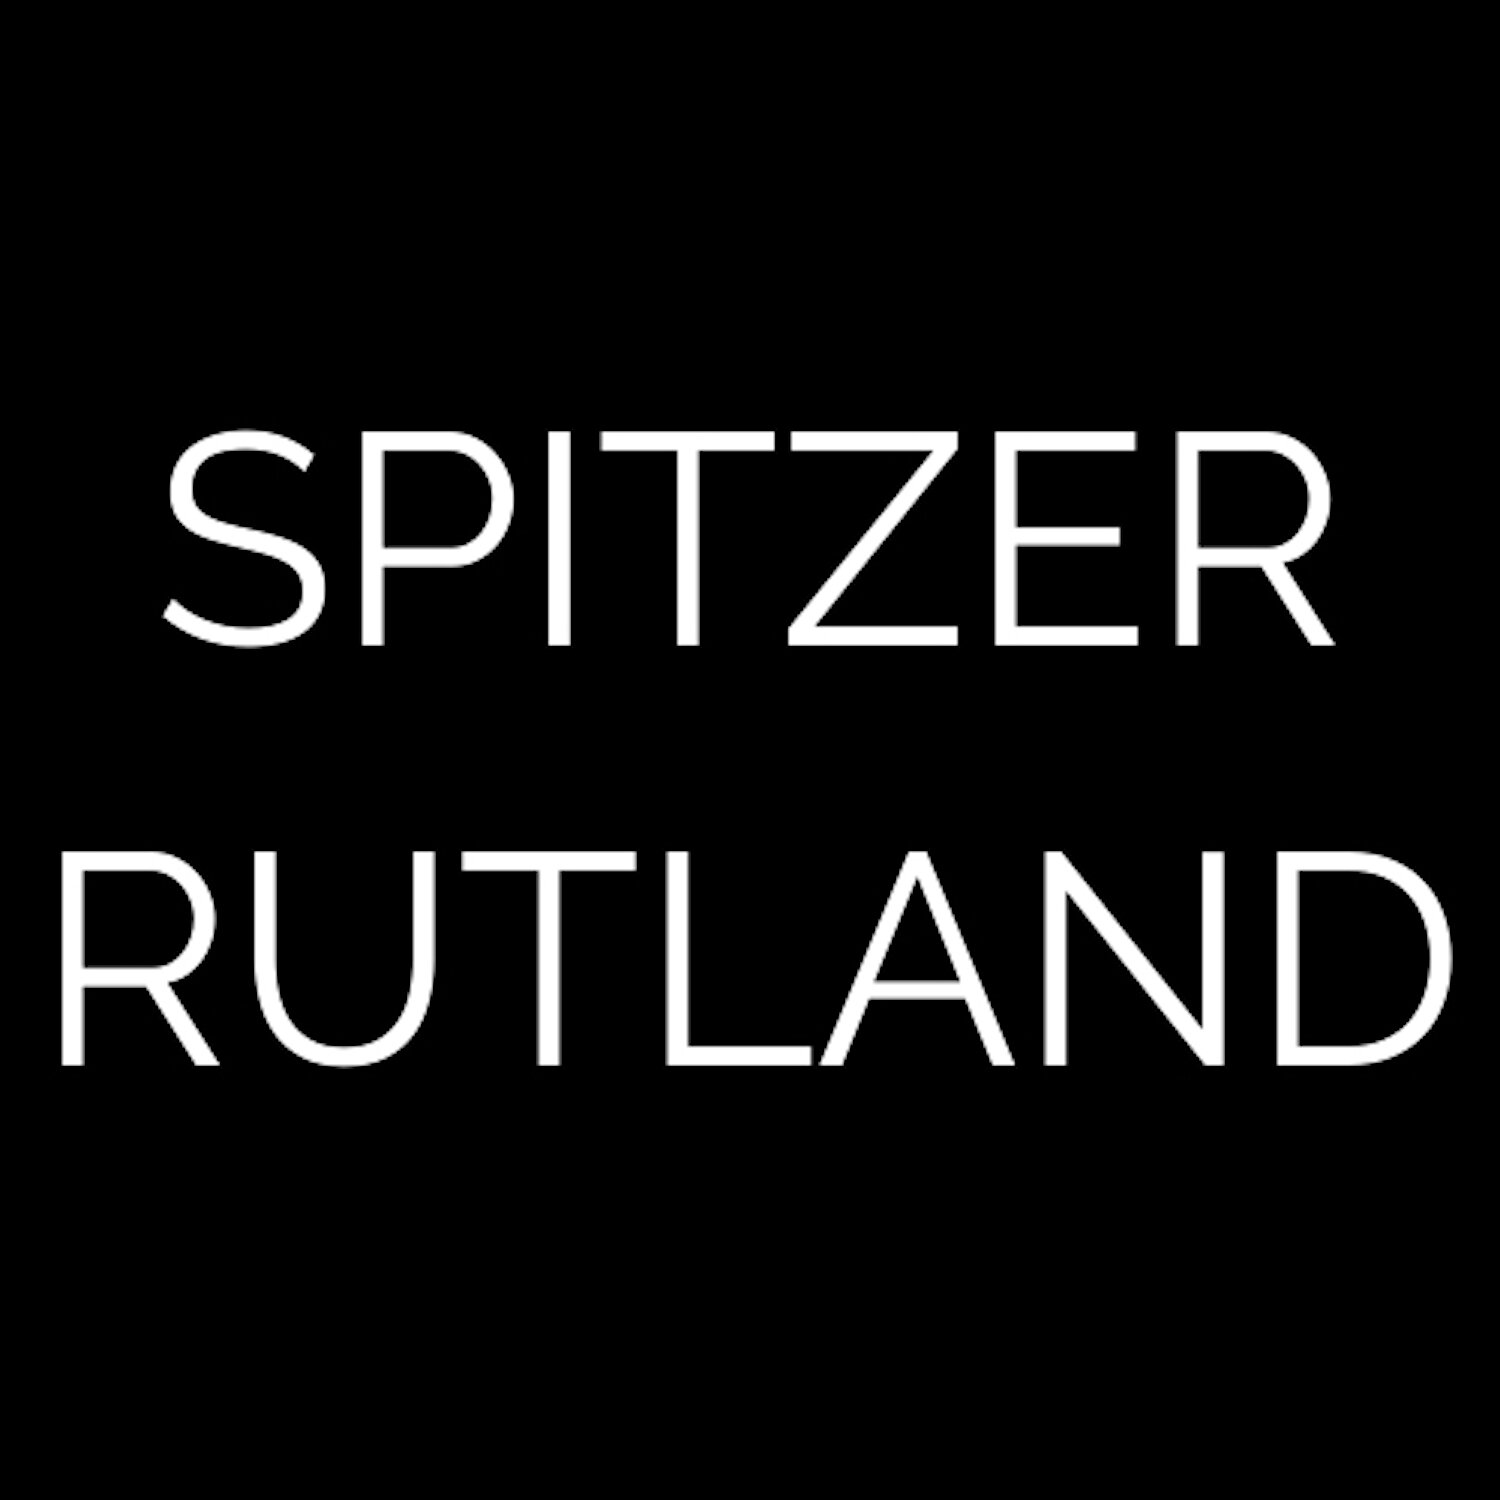 Spitzer Rutland